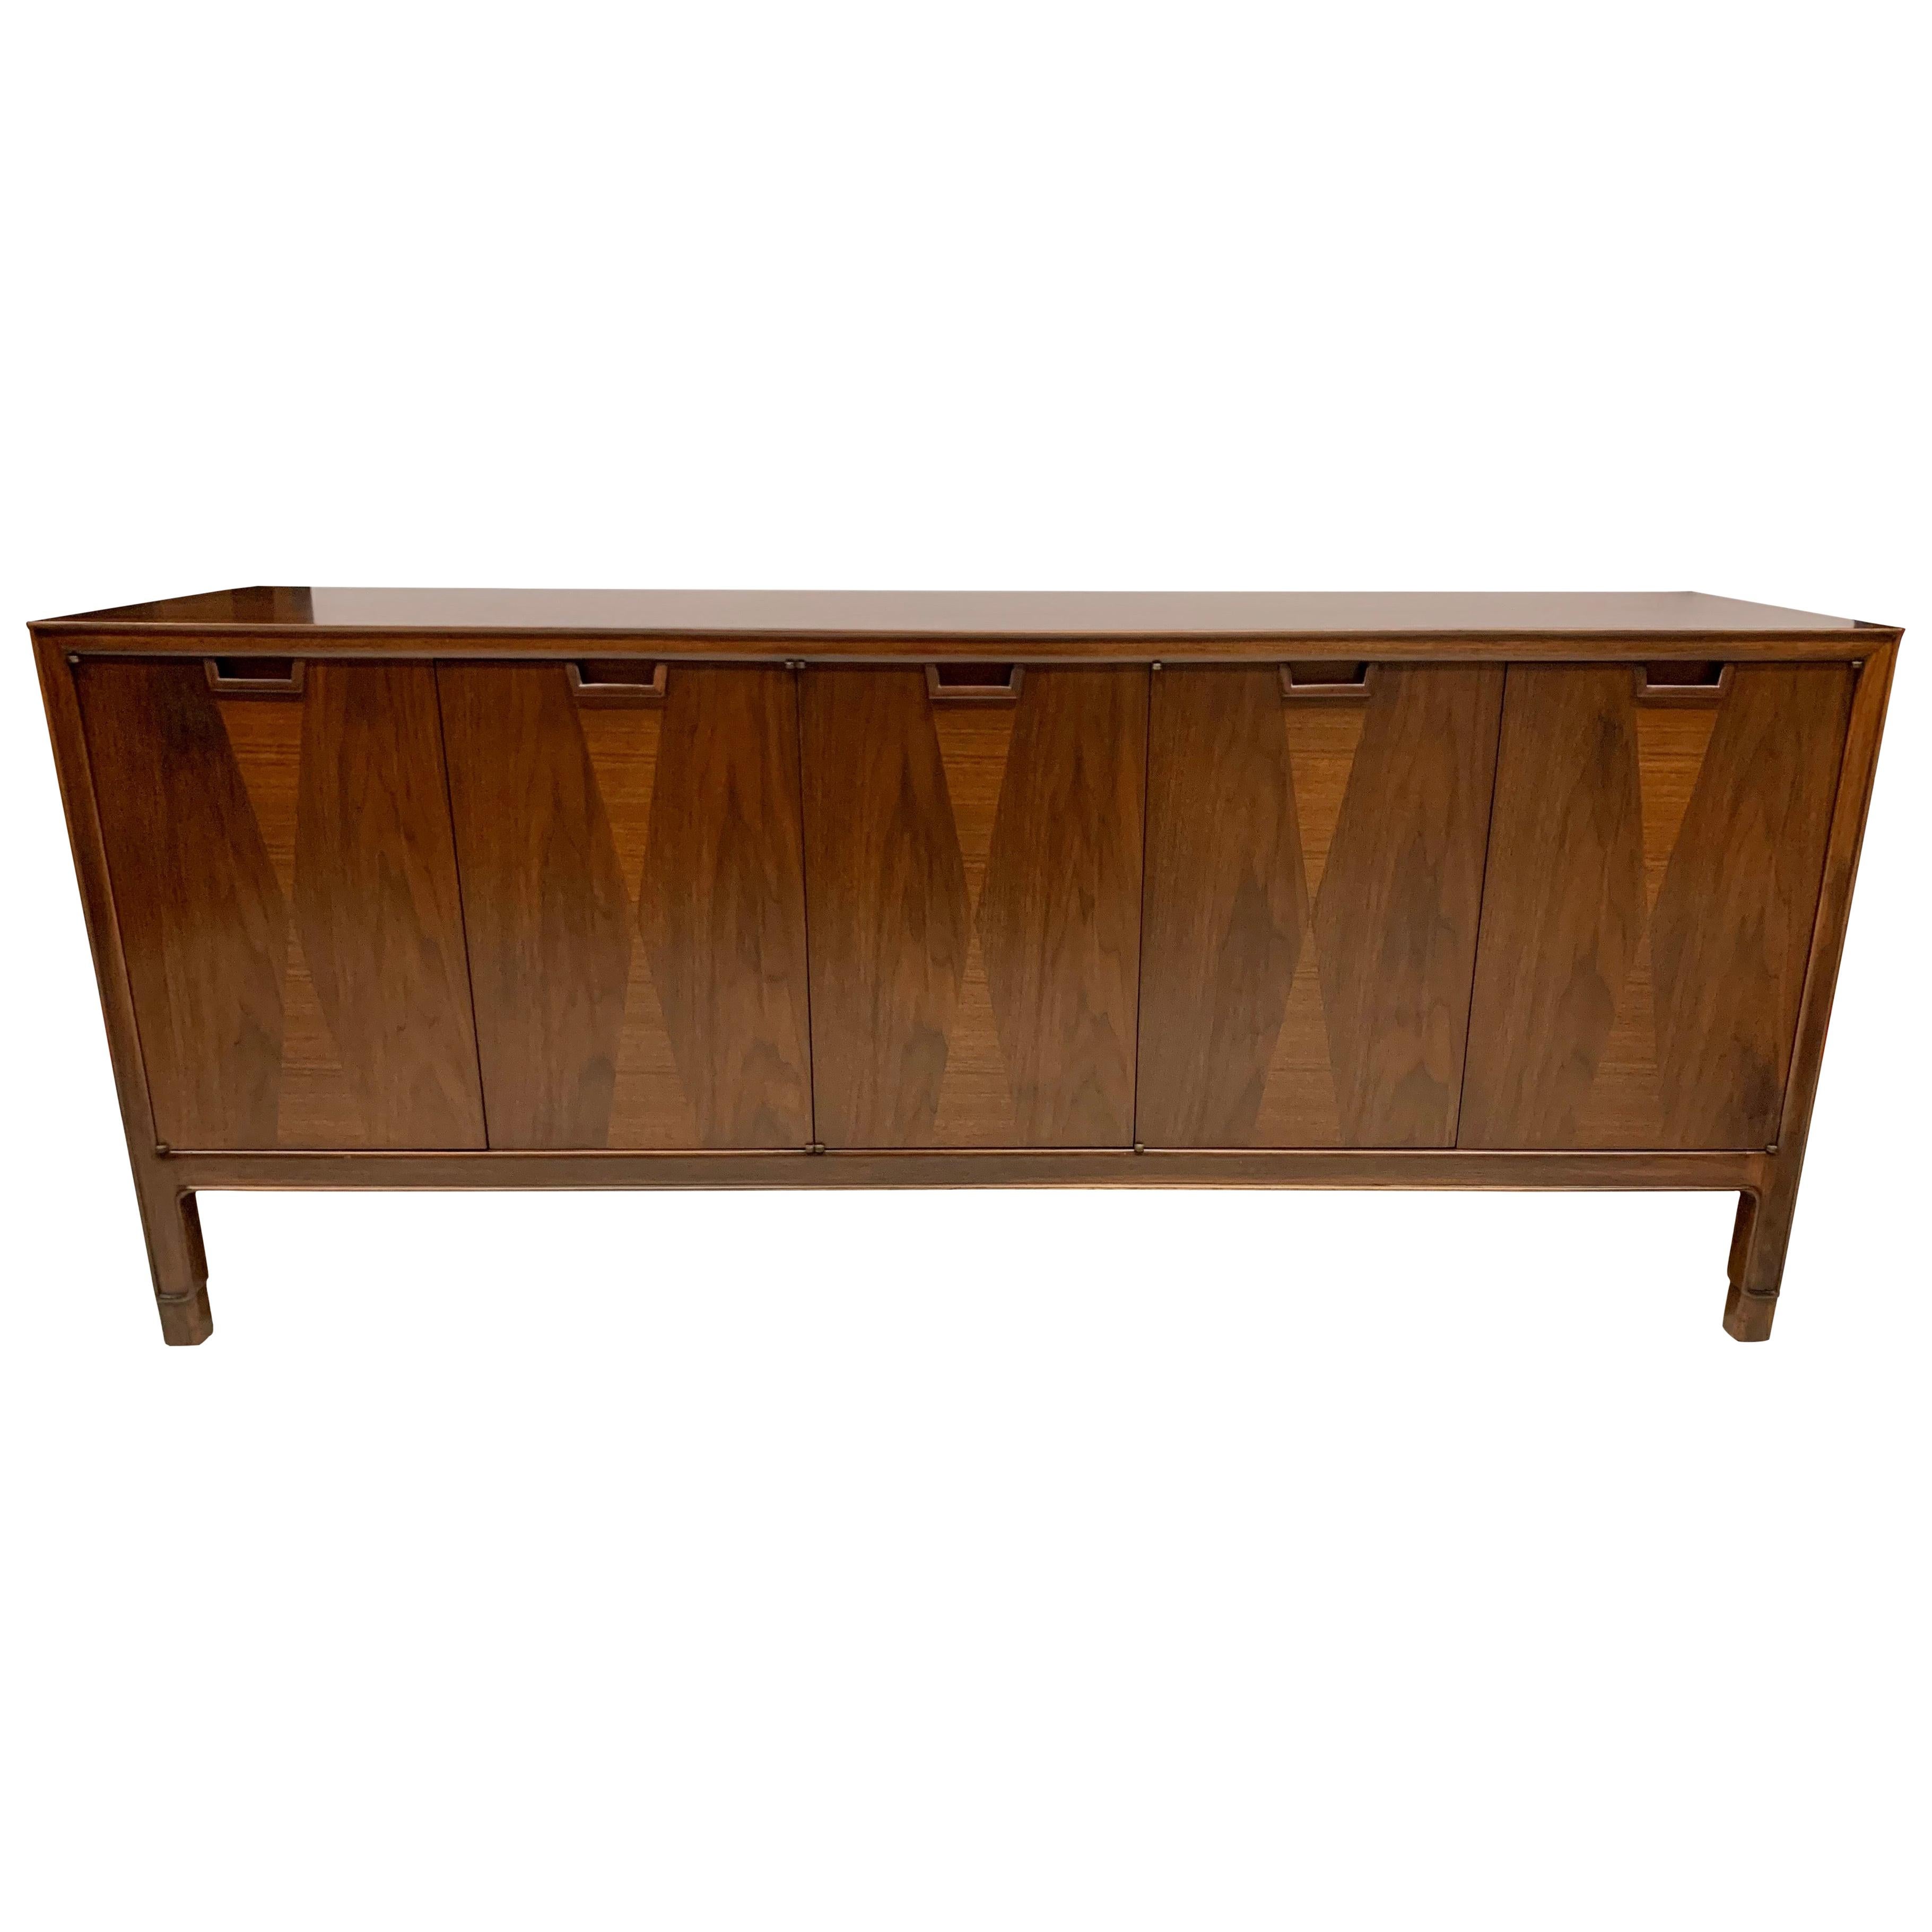 Midcentury Jon Stuart Credenza Sideboard Cabinet Dresser